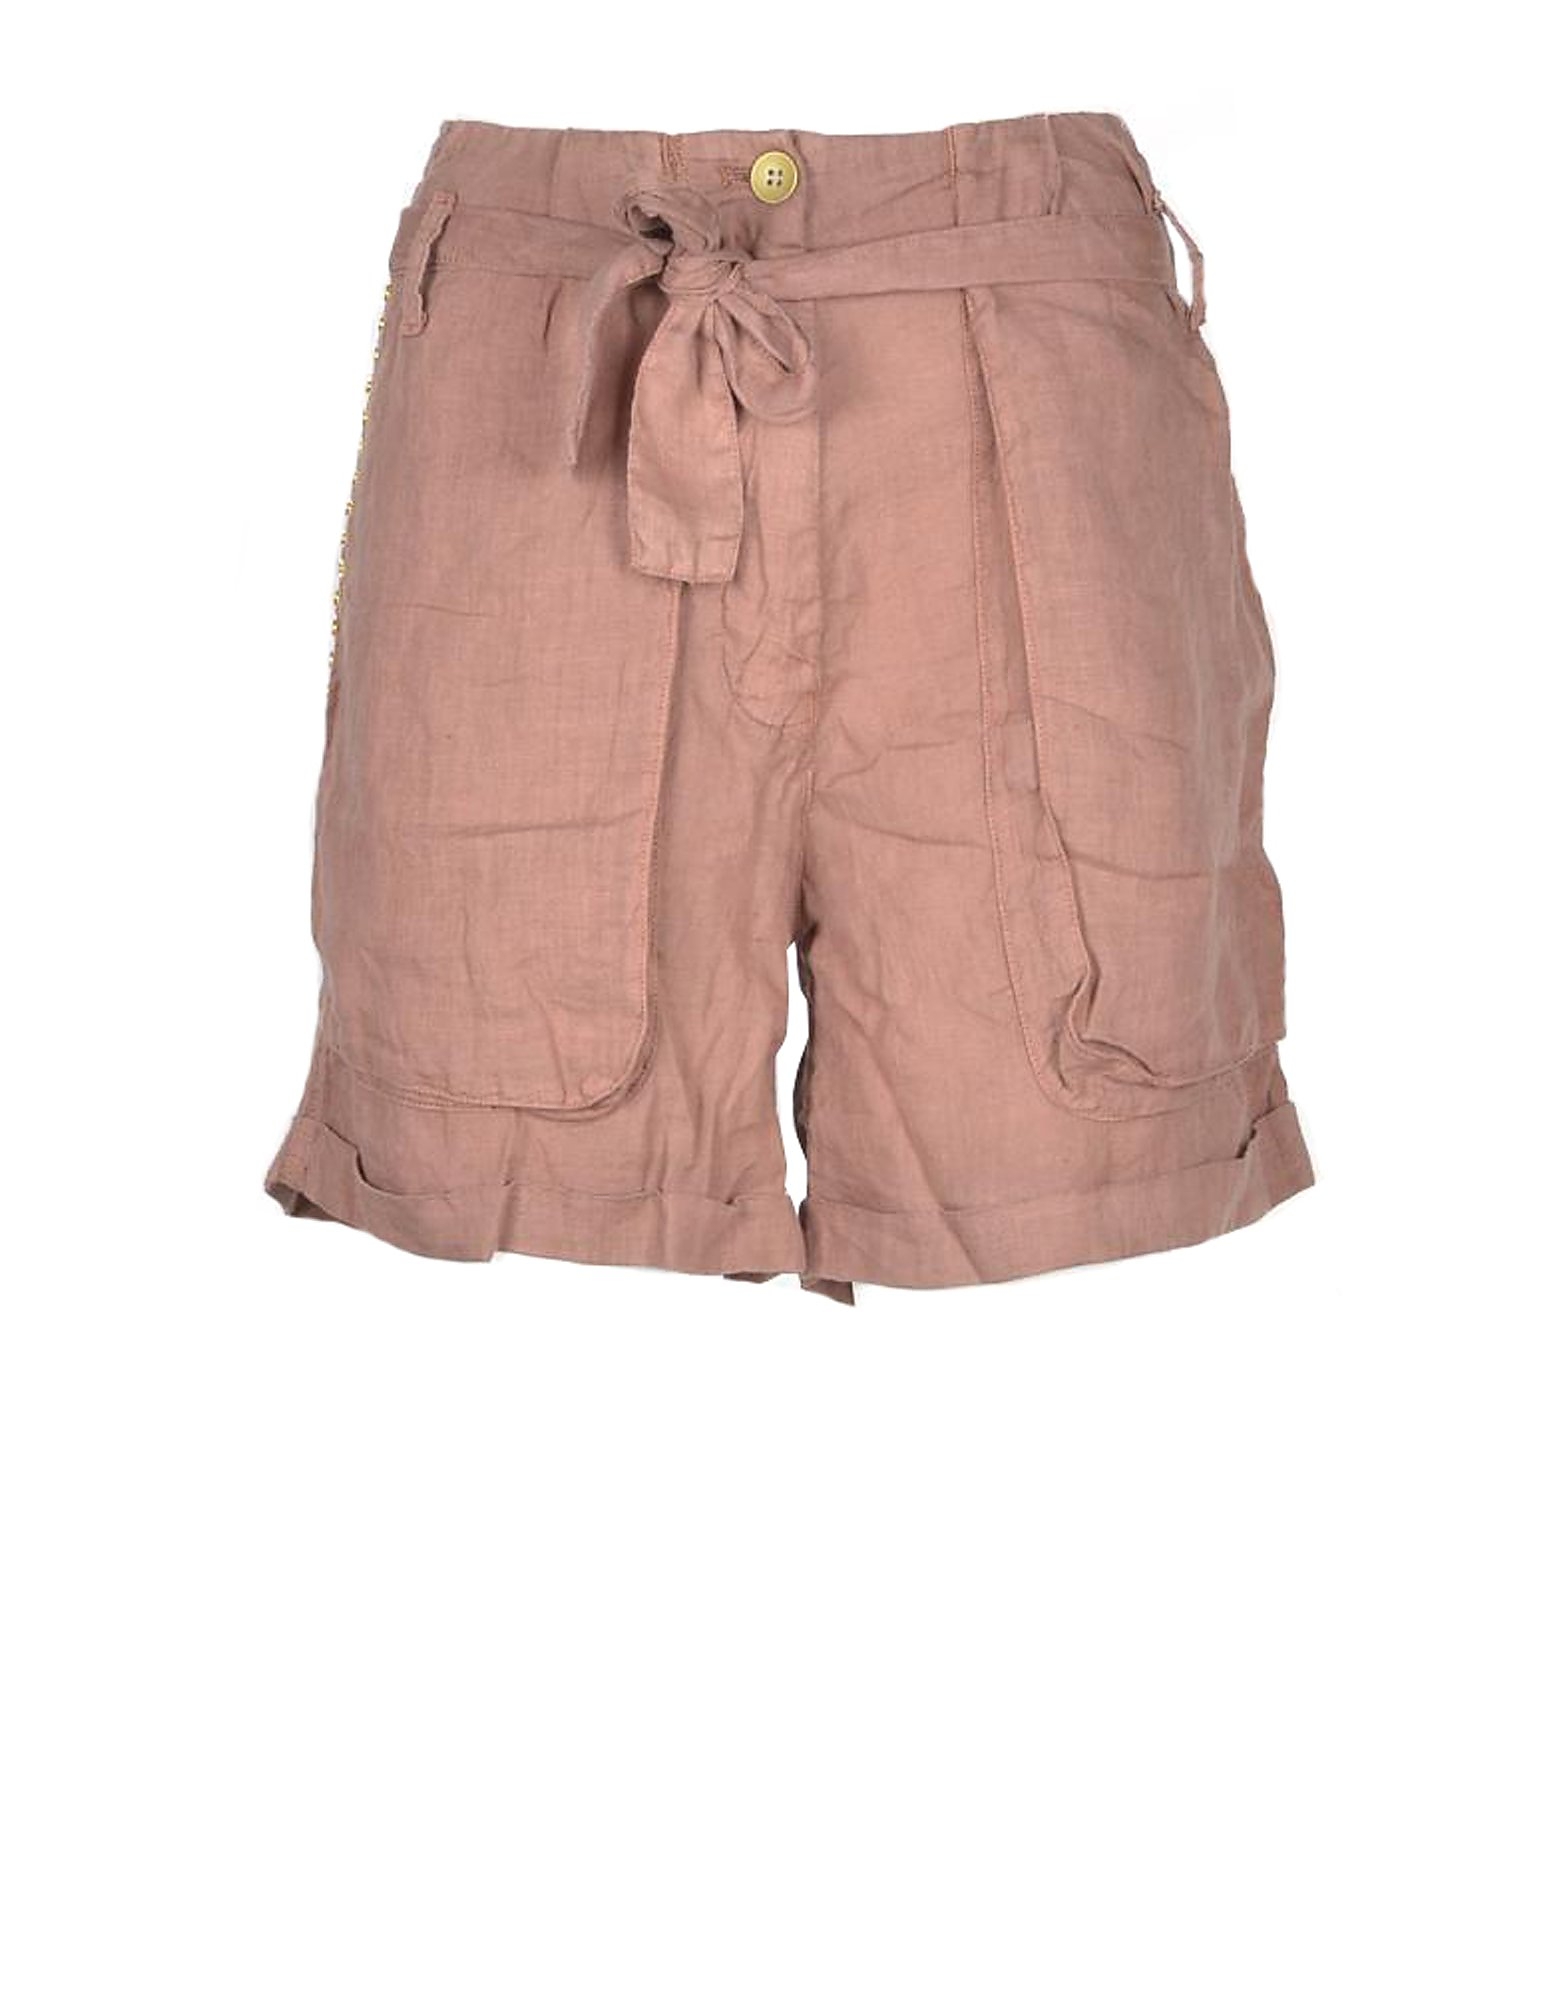 Mason's Women's Antique Pink Shorts